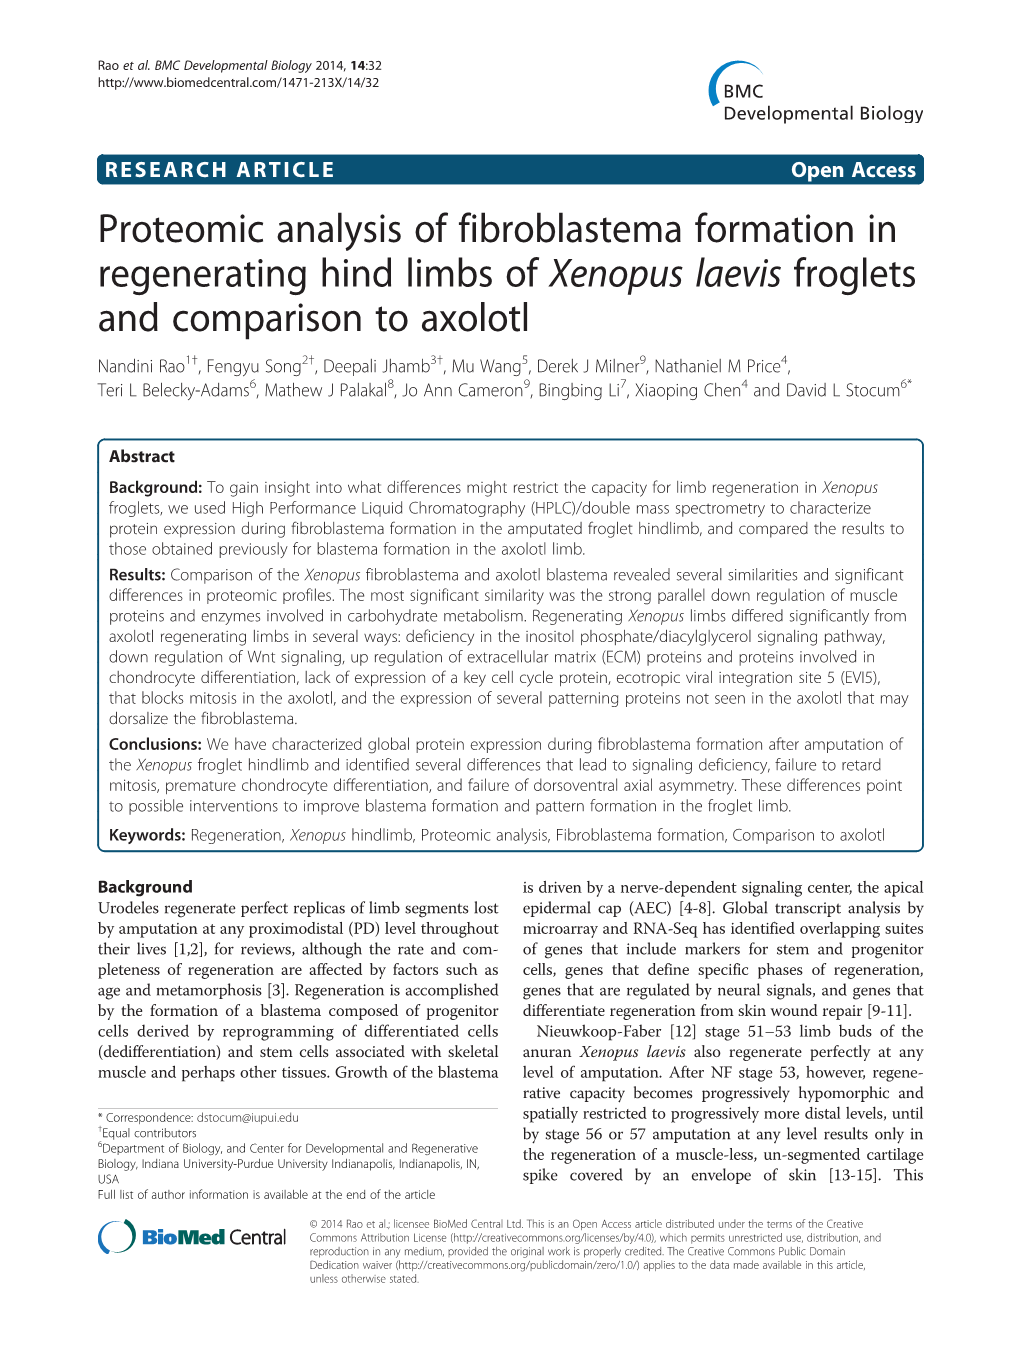 Proteomic Analysis of Fibroblastema Formation in Regenerating Hind